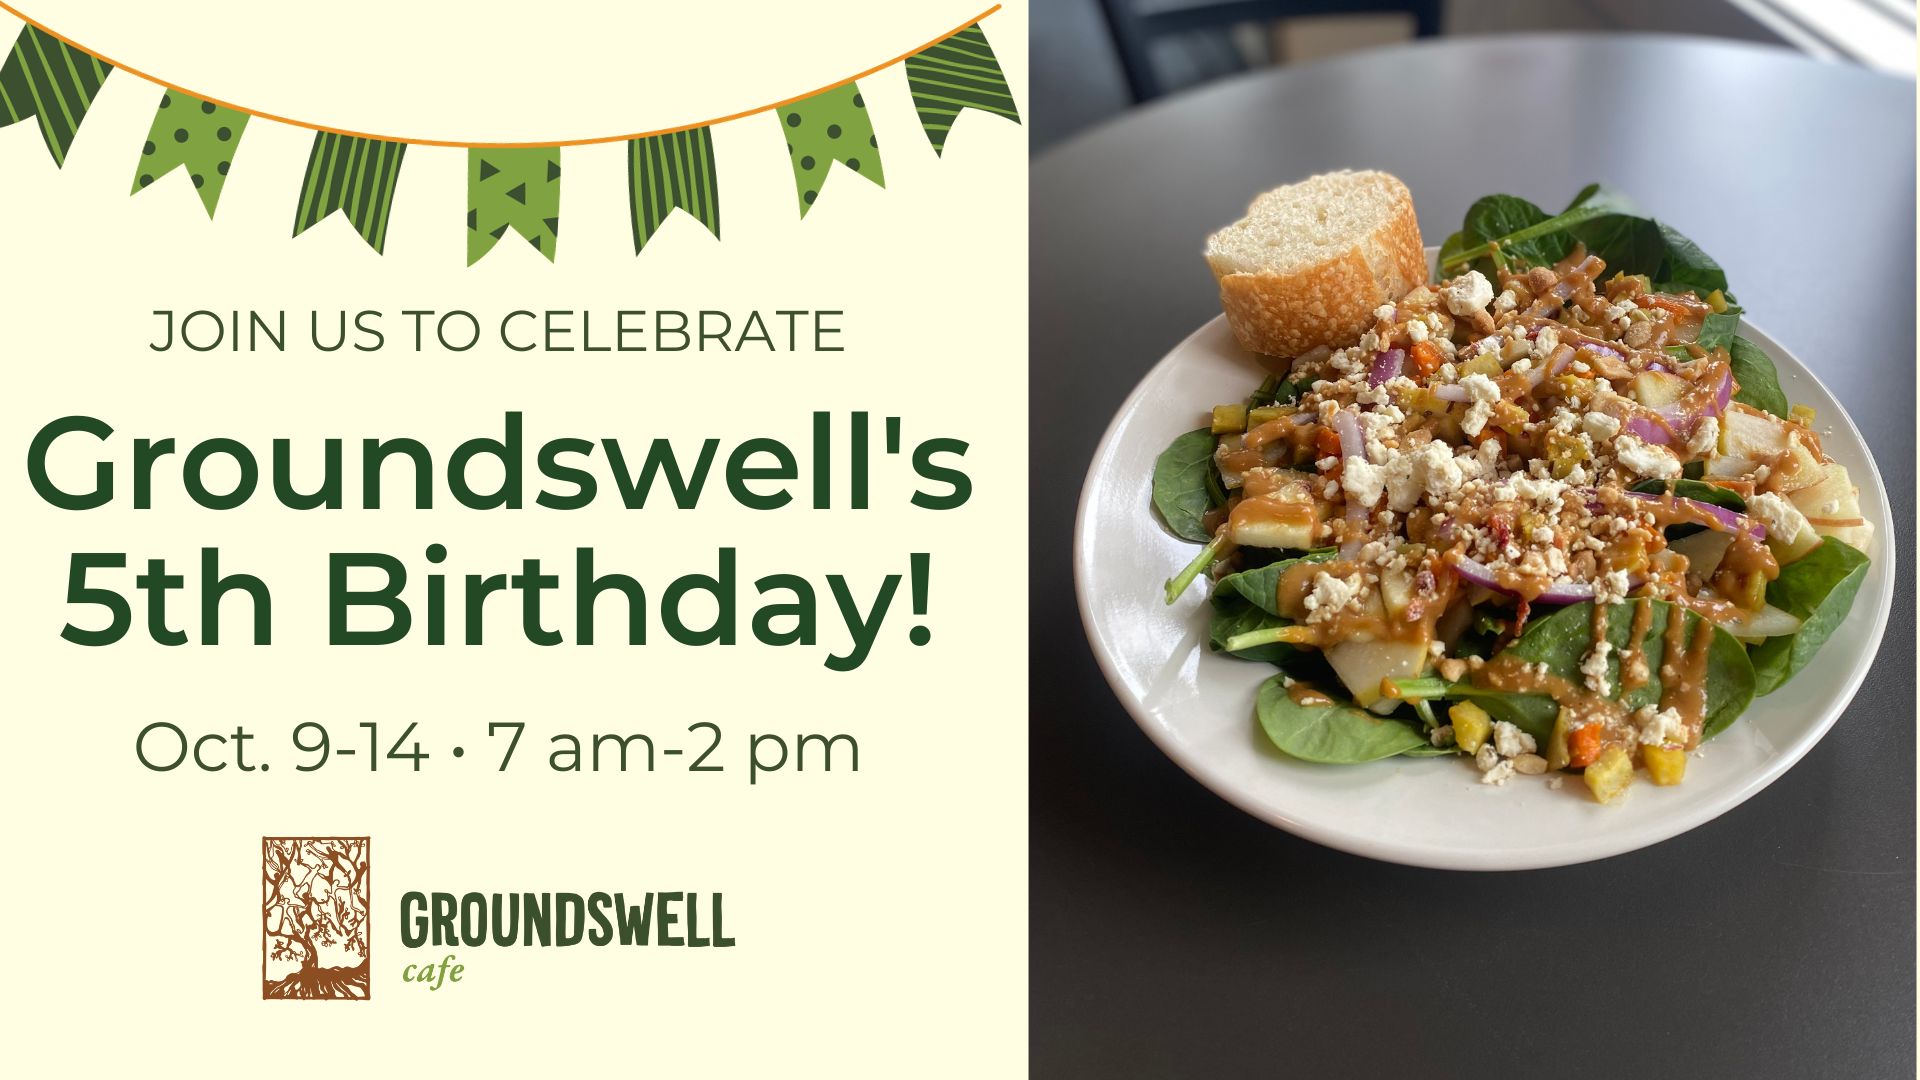 Groundswell’s 5th Birthday Celebration